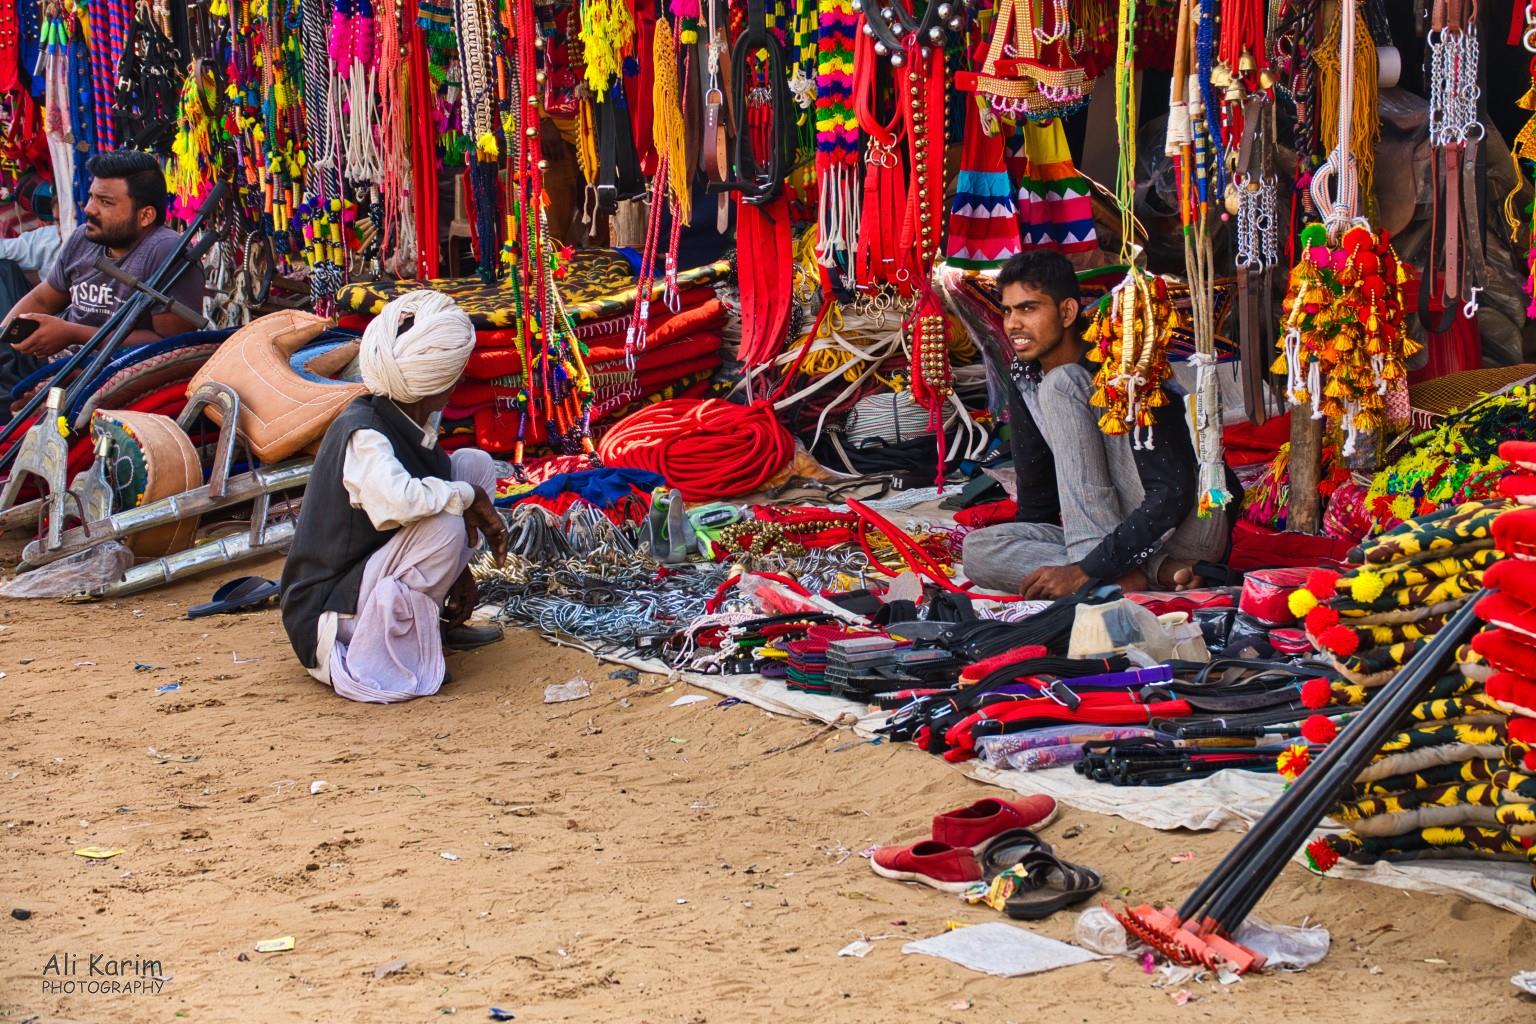 Pushkar, Rajasthan Lots of makeshift shops selling colorful paraphernalia for camels and horses